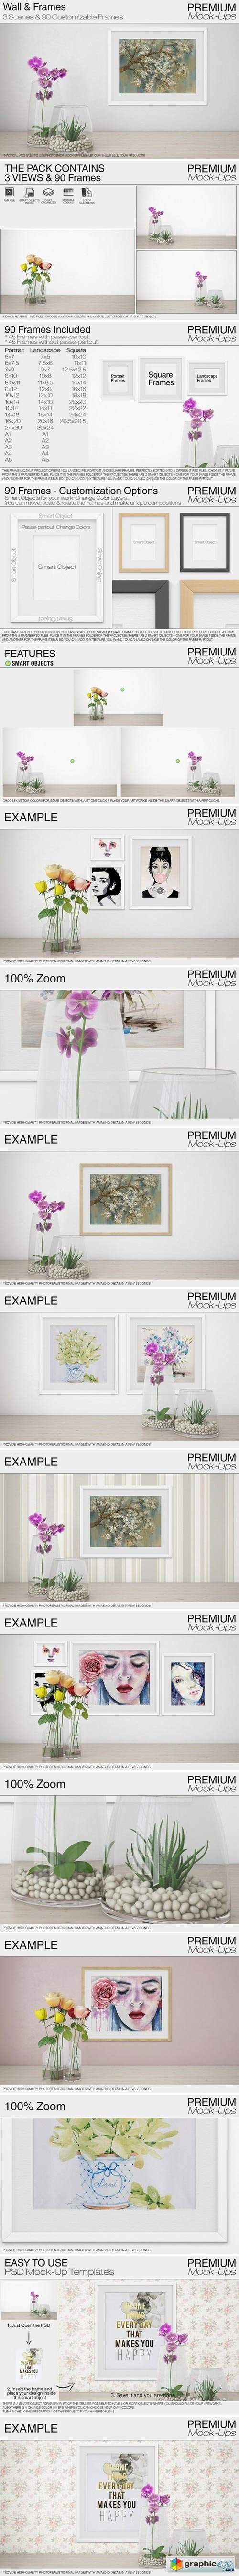 Wall & Frames Mockup - Orchid